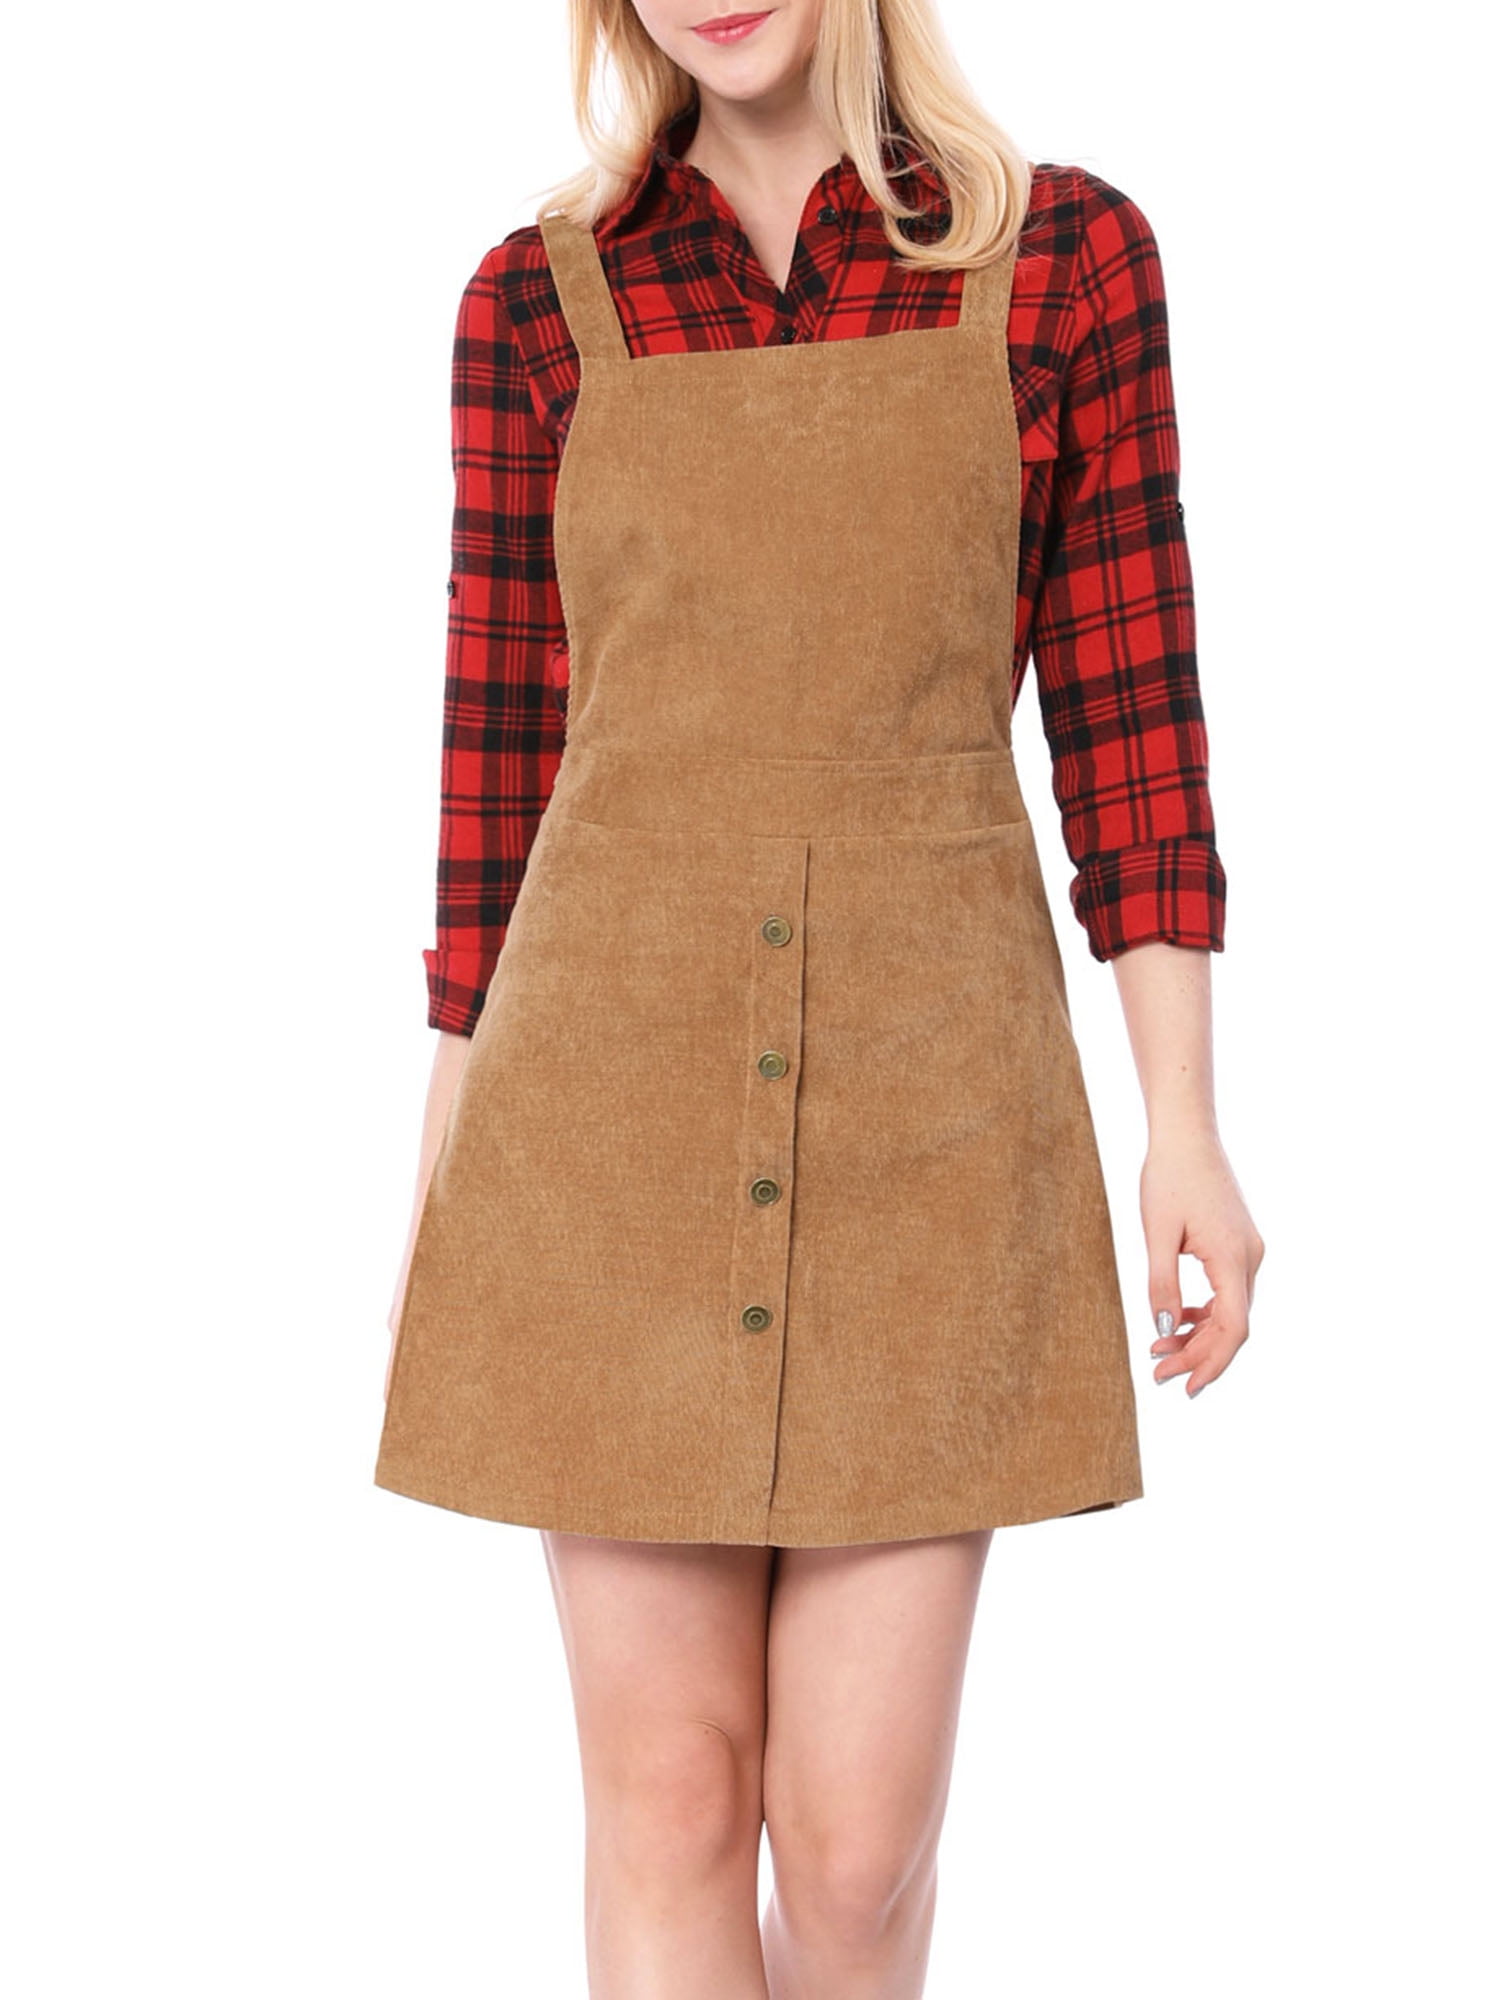 Suspender Overall Skirt Dress - Walmart ...